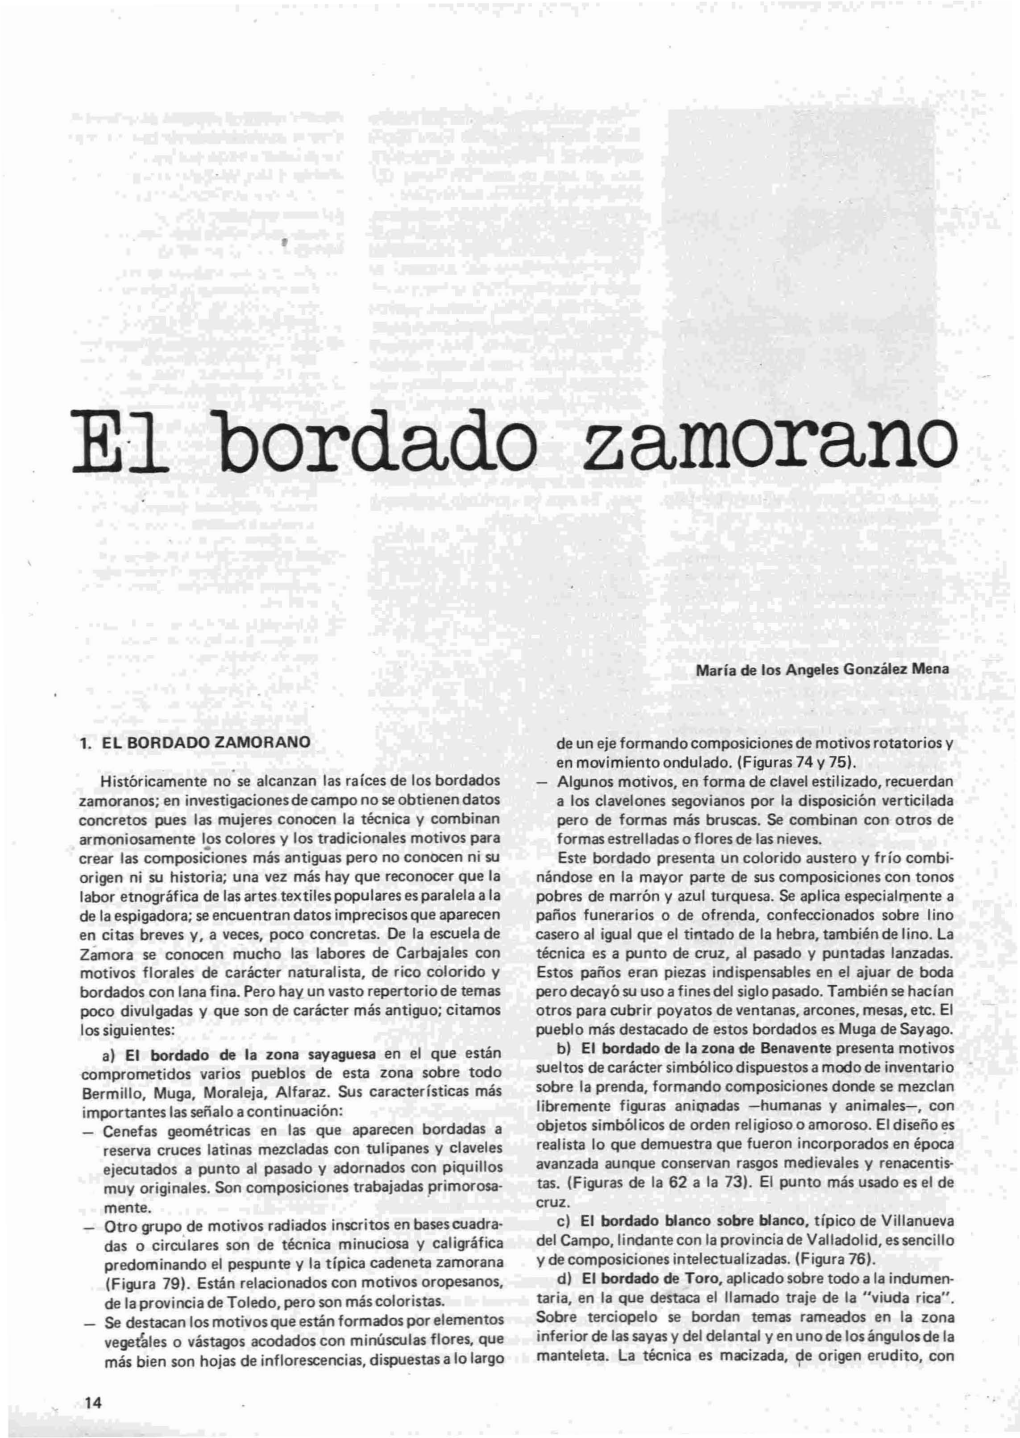 El Bordado Zamorano